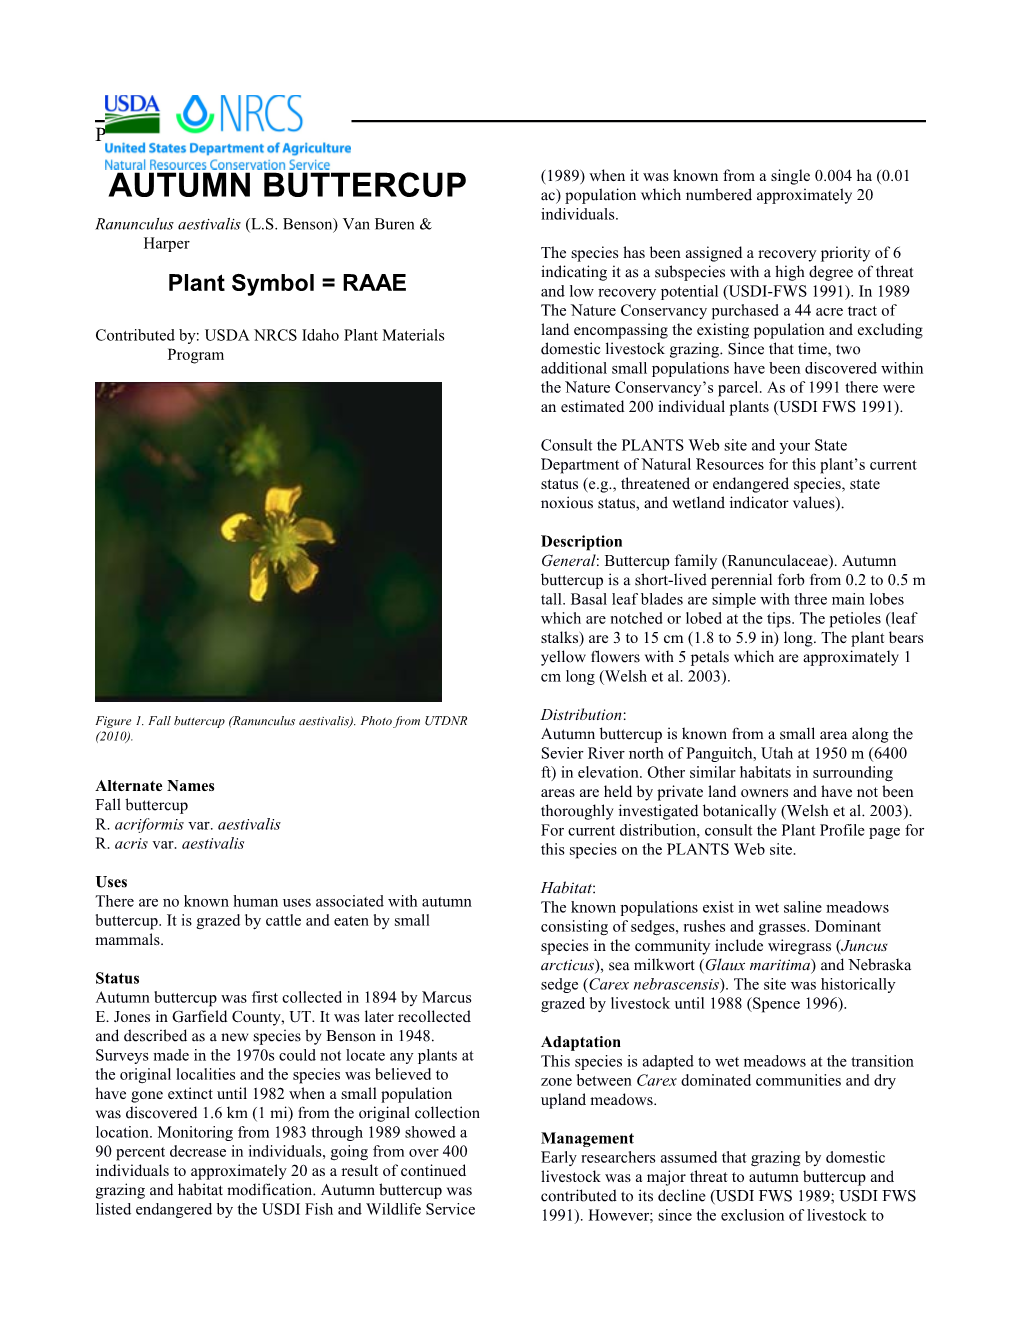 Plant Guide for Autumn Buttercup (Ranunculus Aestivalis)